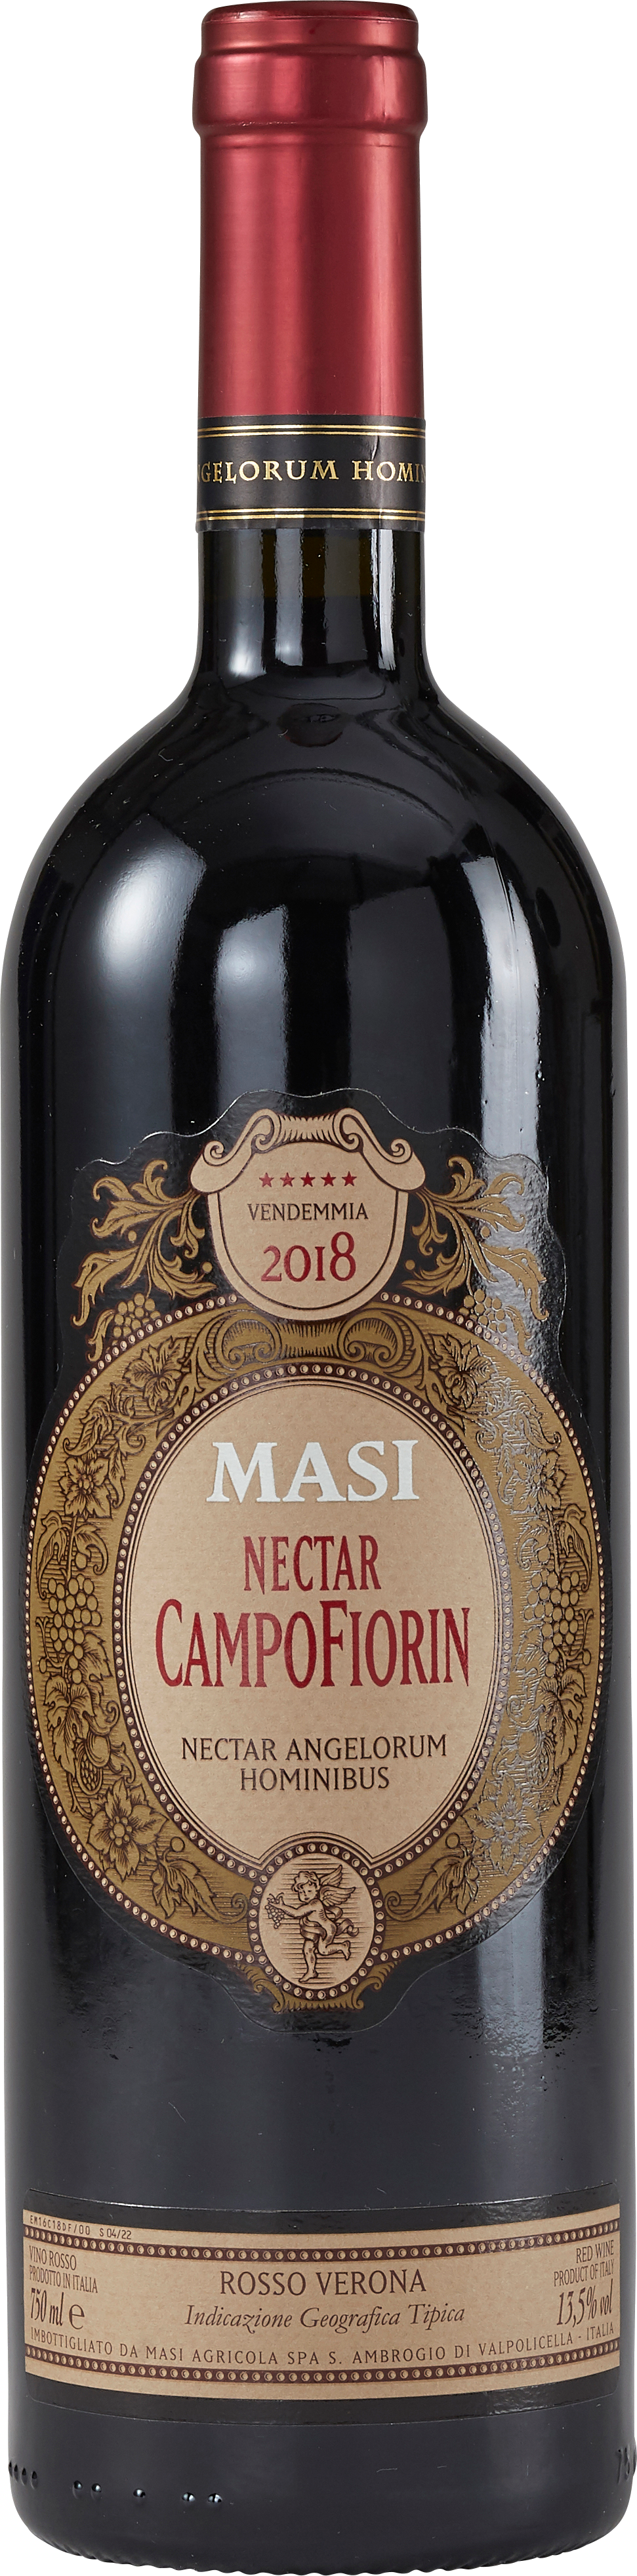 Masi Nectar Campo Fiorin, Rosso del Veronese IGT